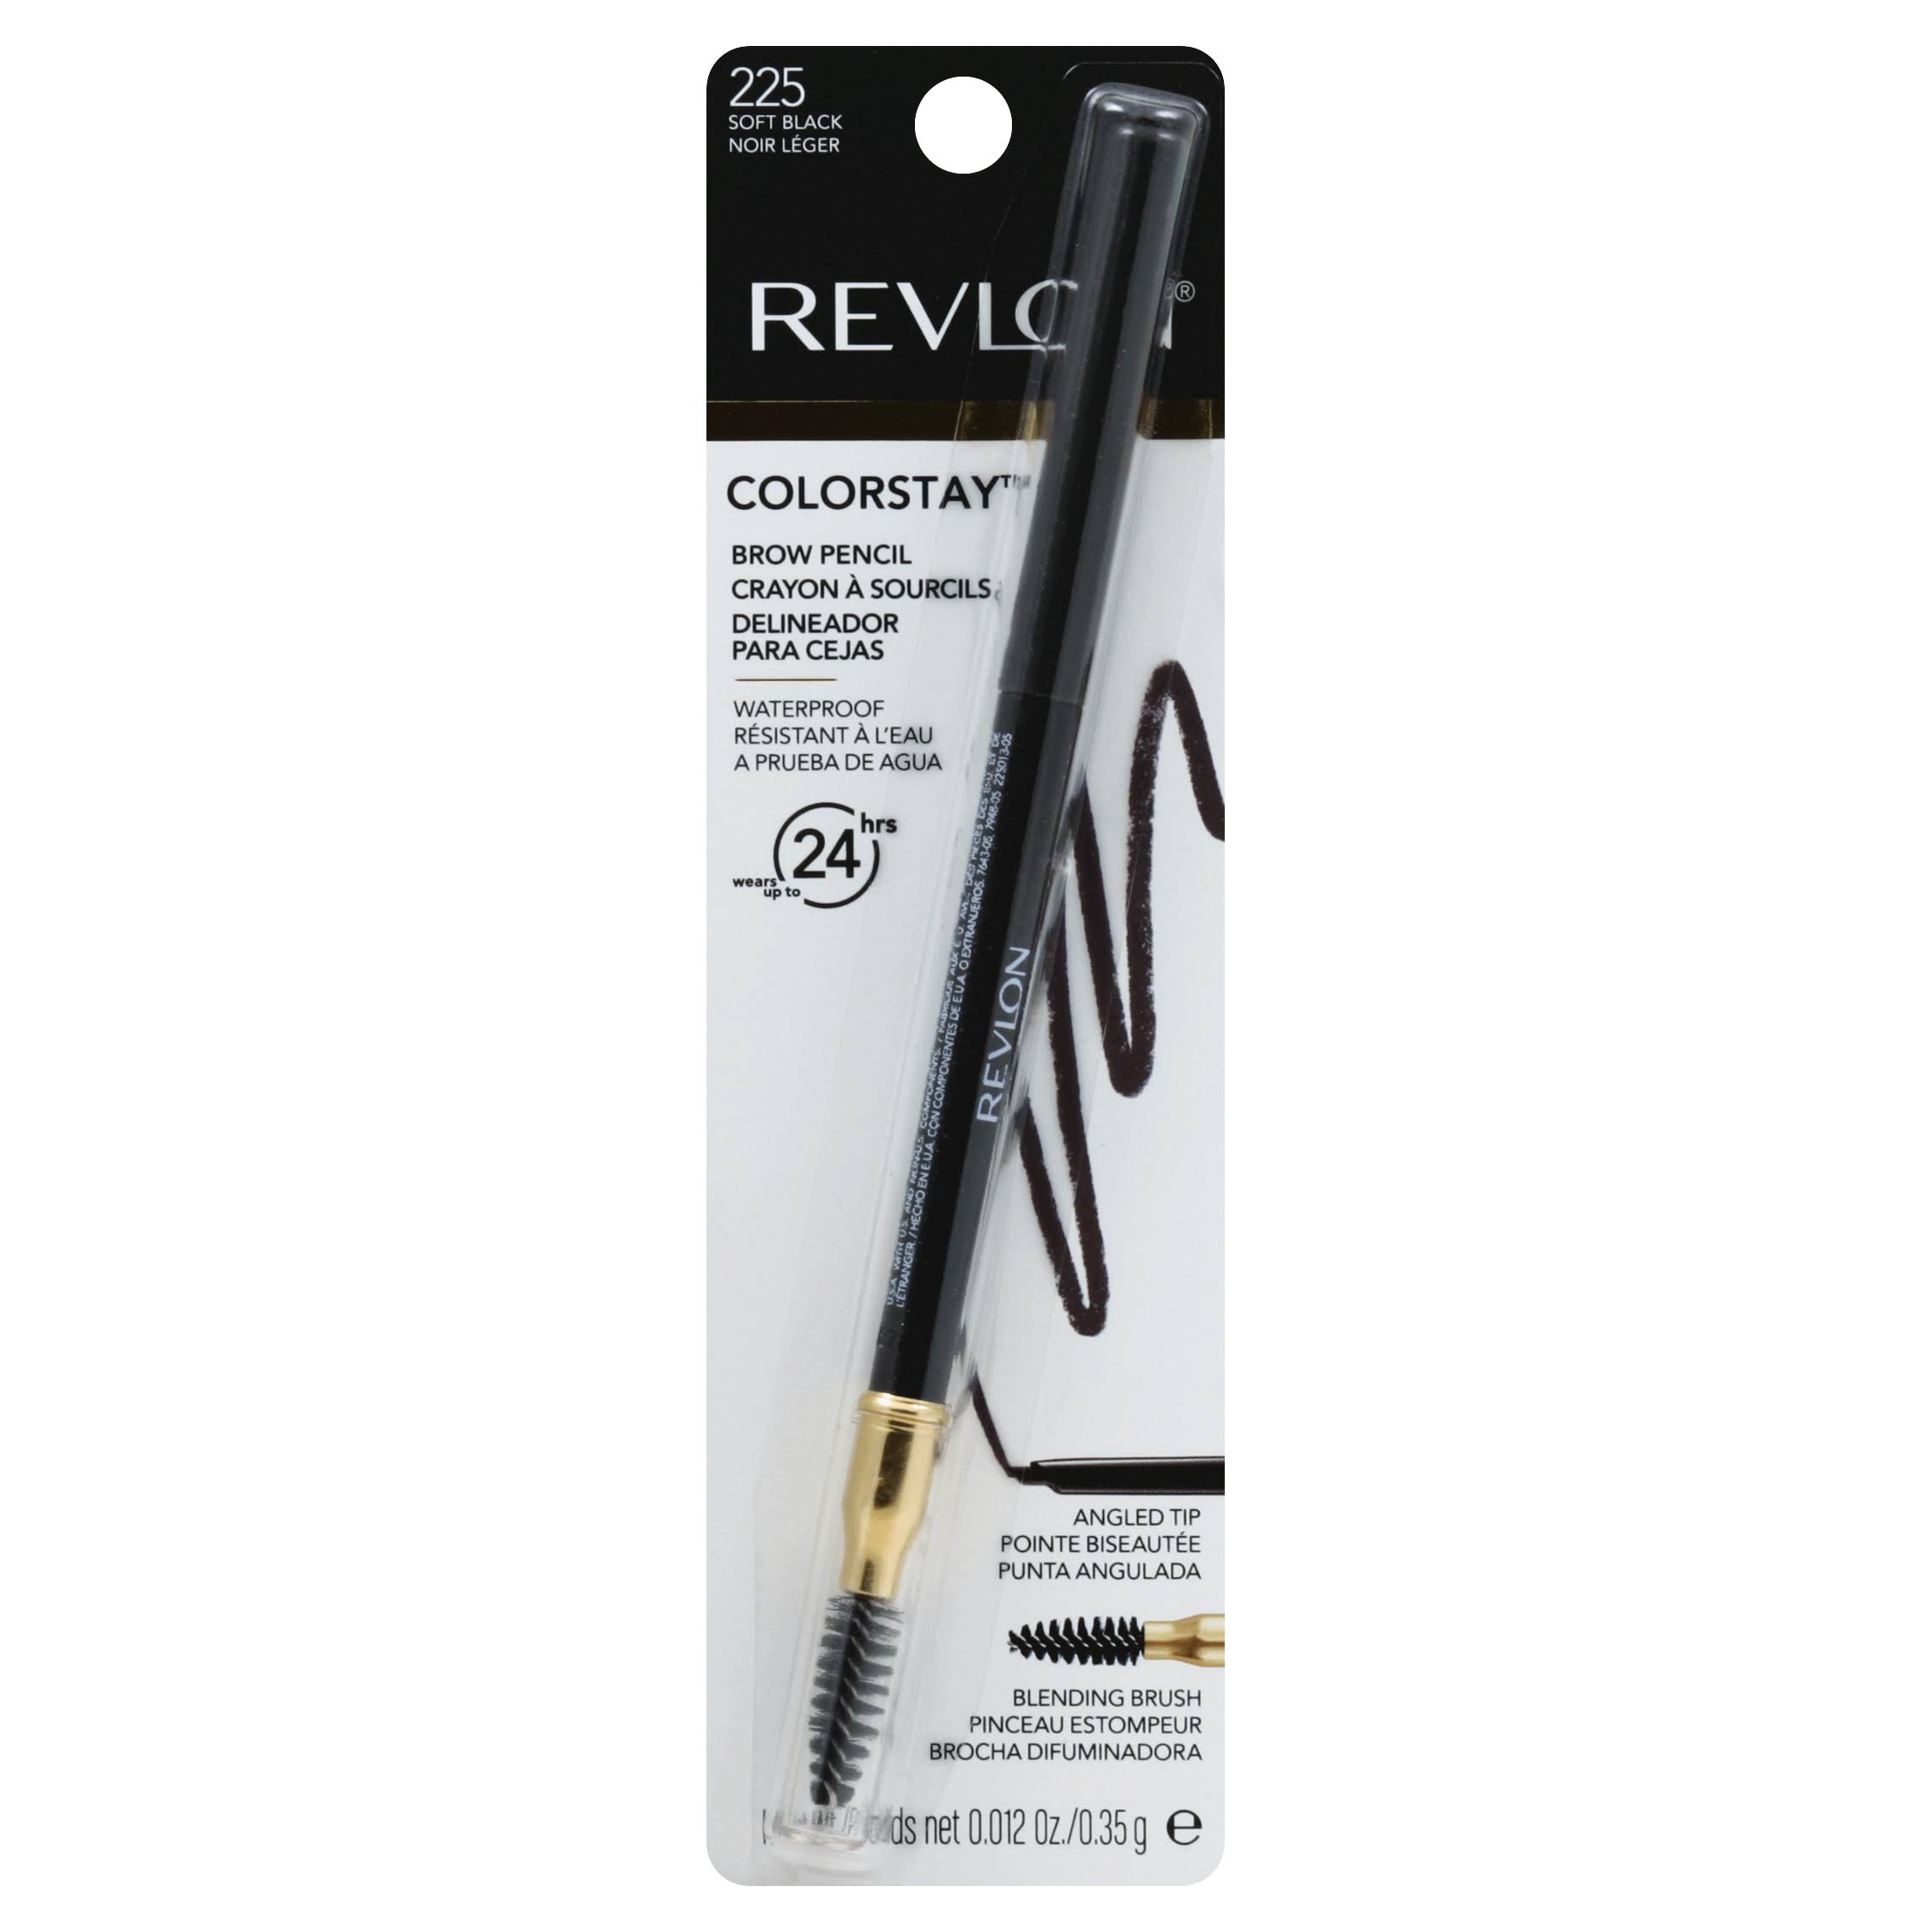 Revlon Colorstay Brow Pencil - 225 Soft Black